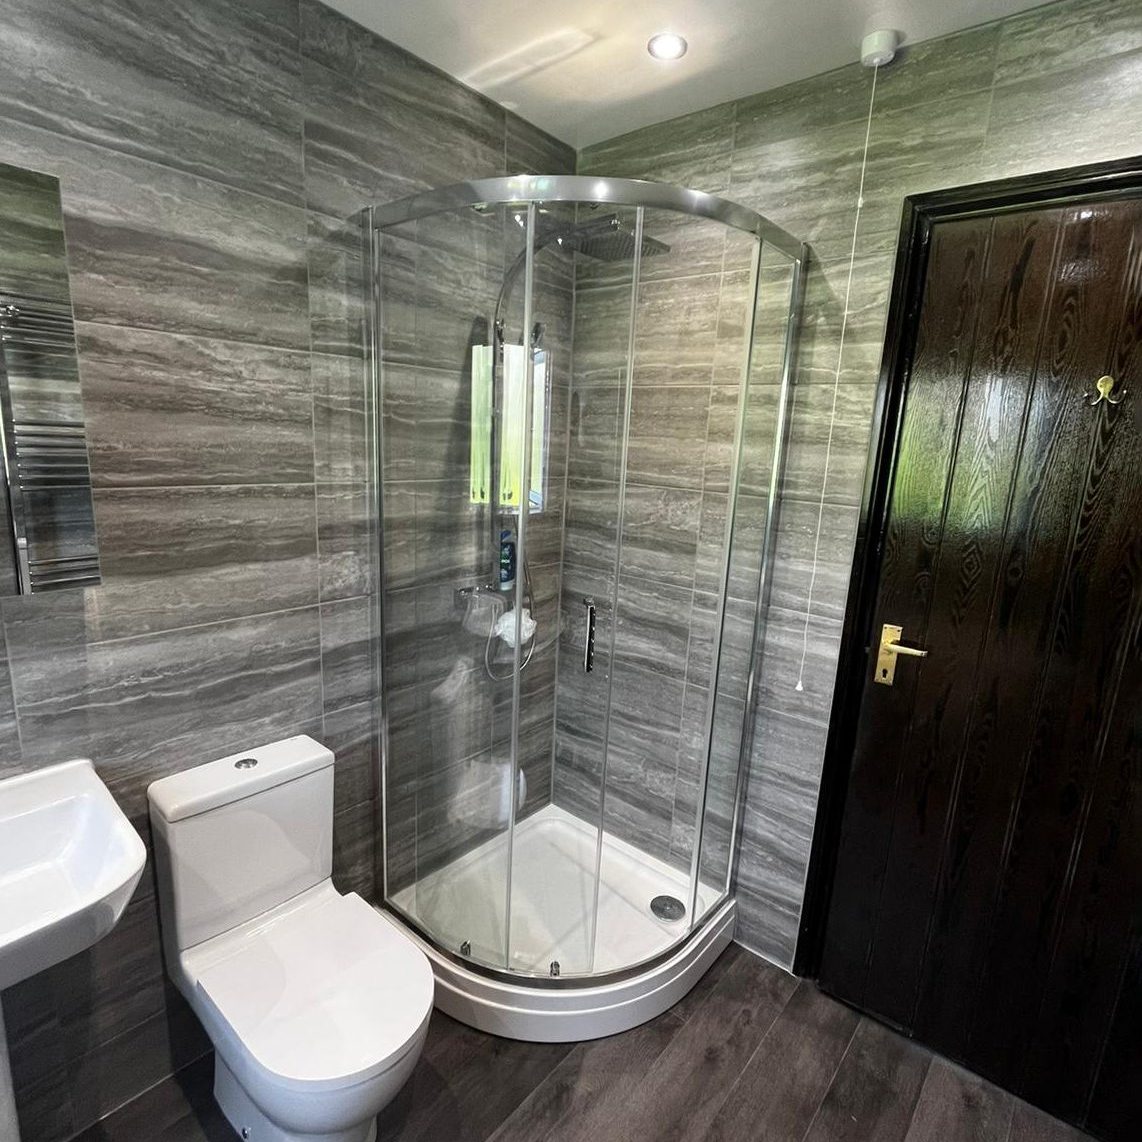 Bathroom toilet shower Installation Services In Huddersfield